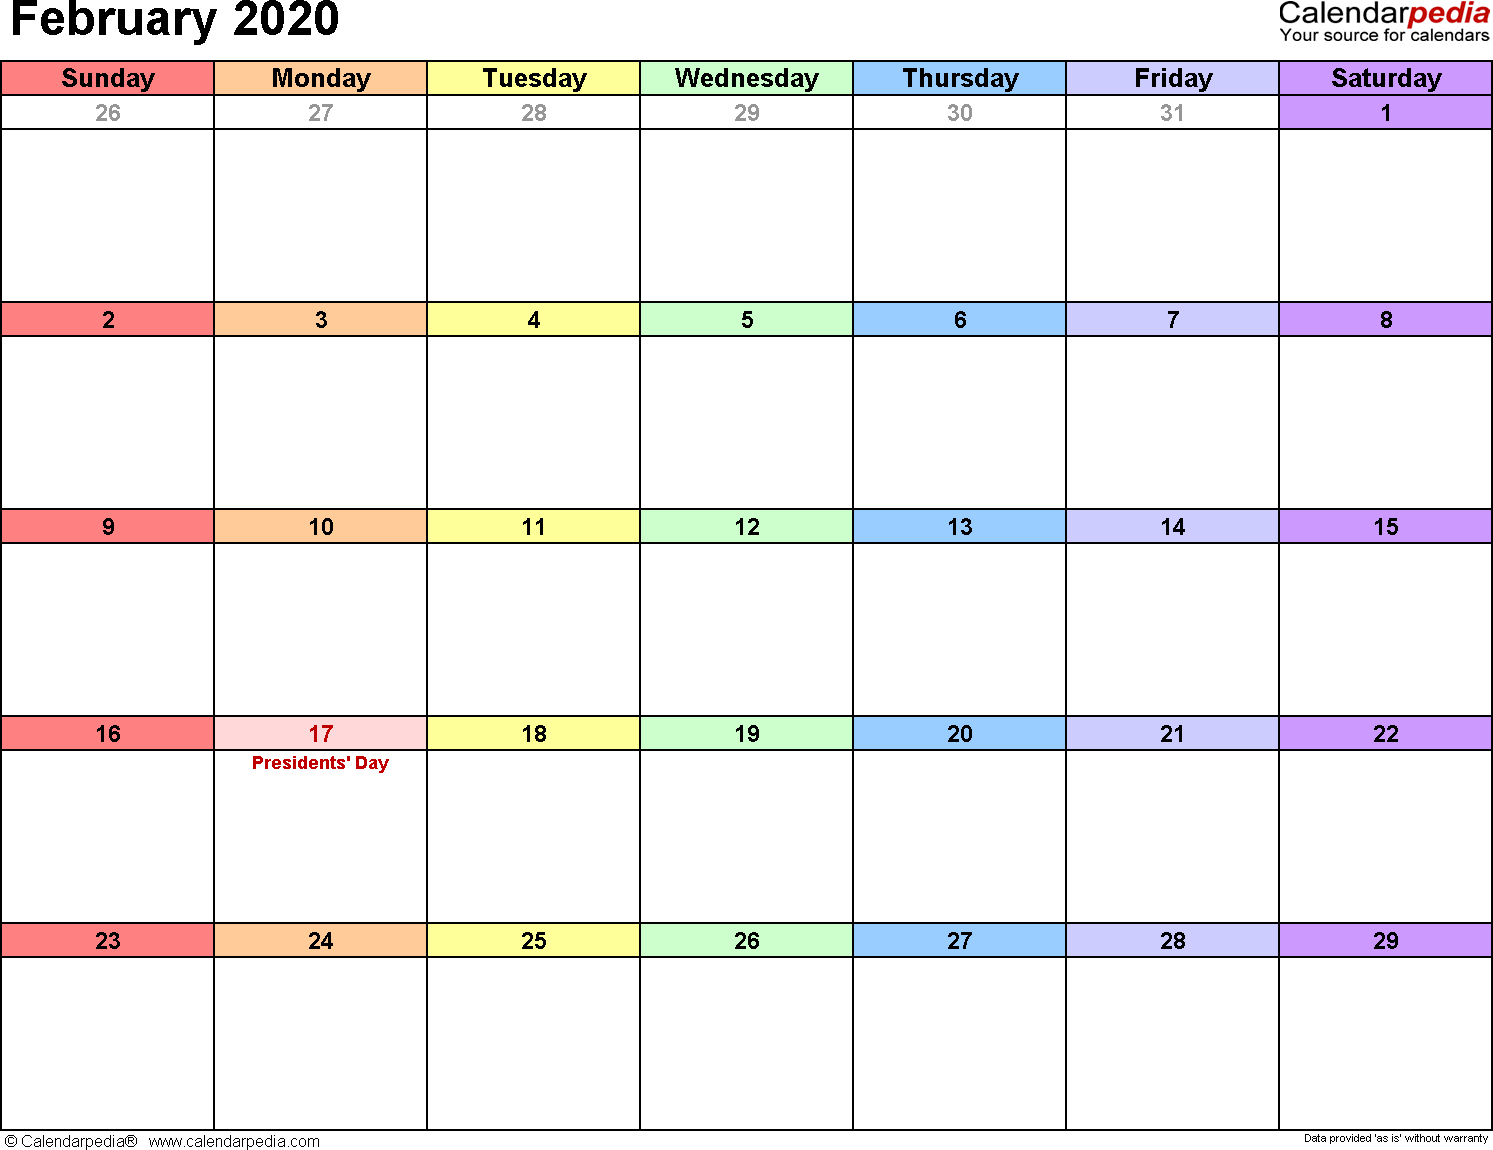 Calendarpedia - Your Source For Calendars